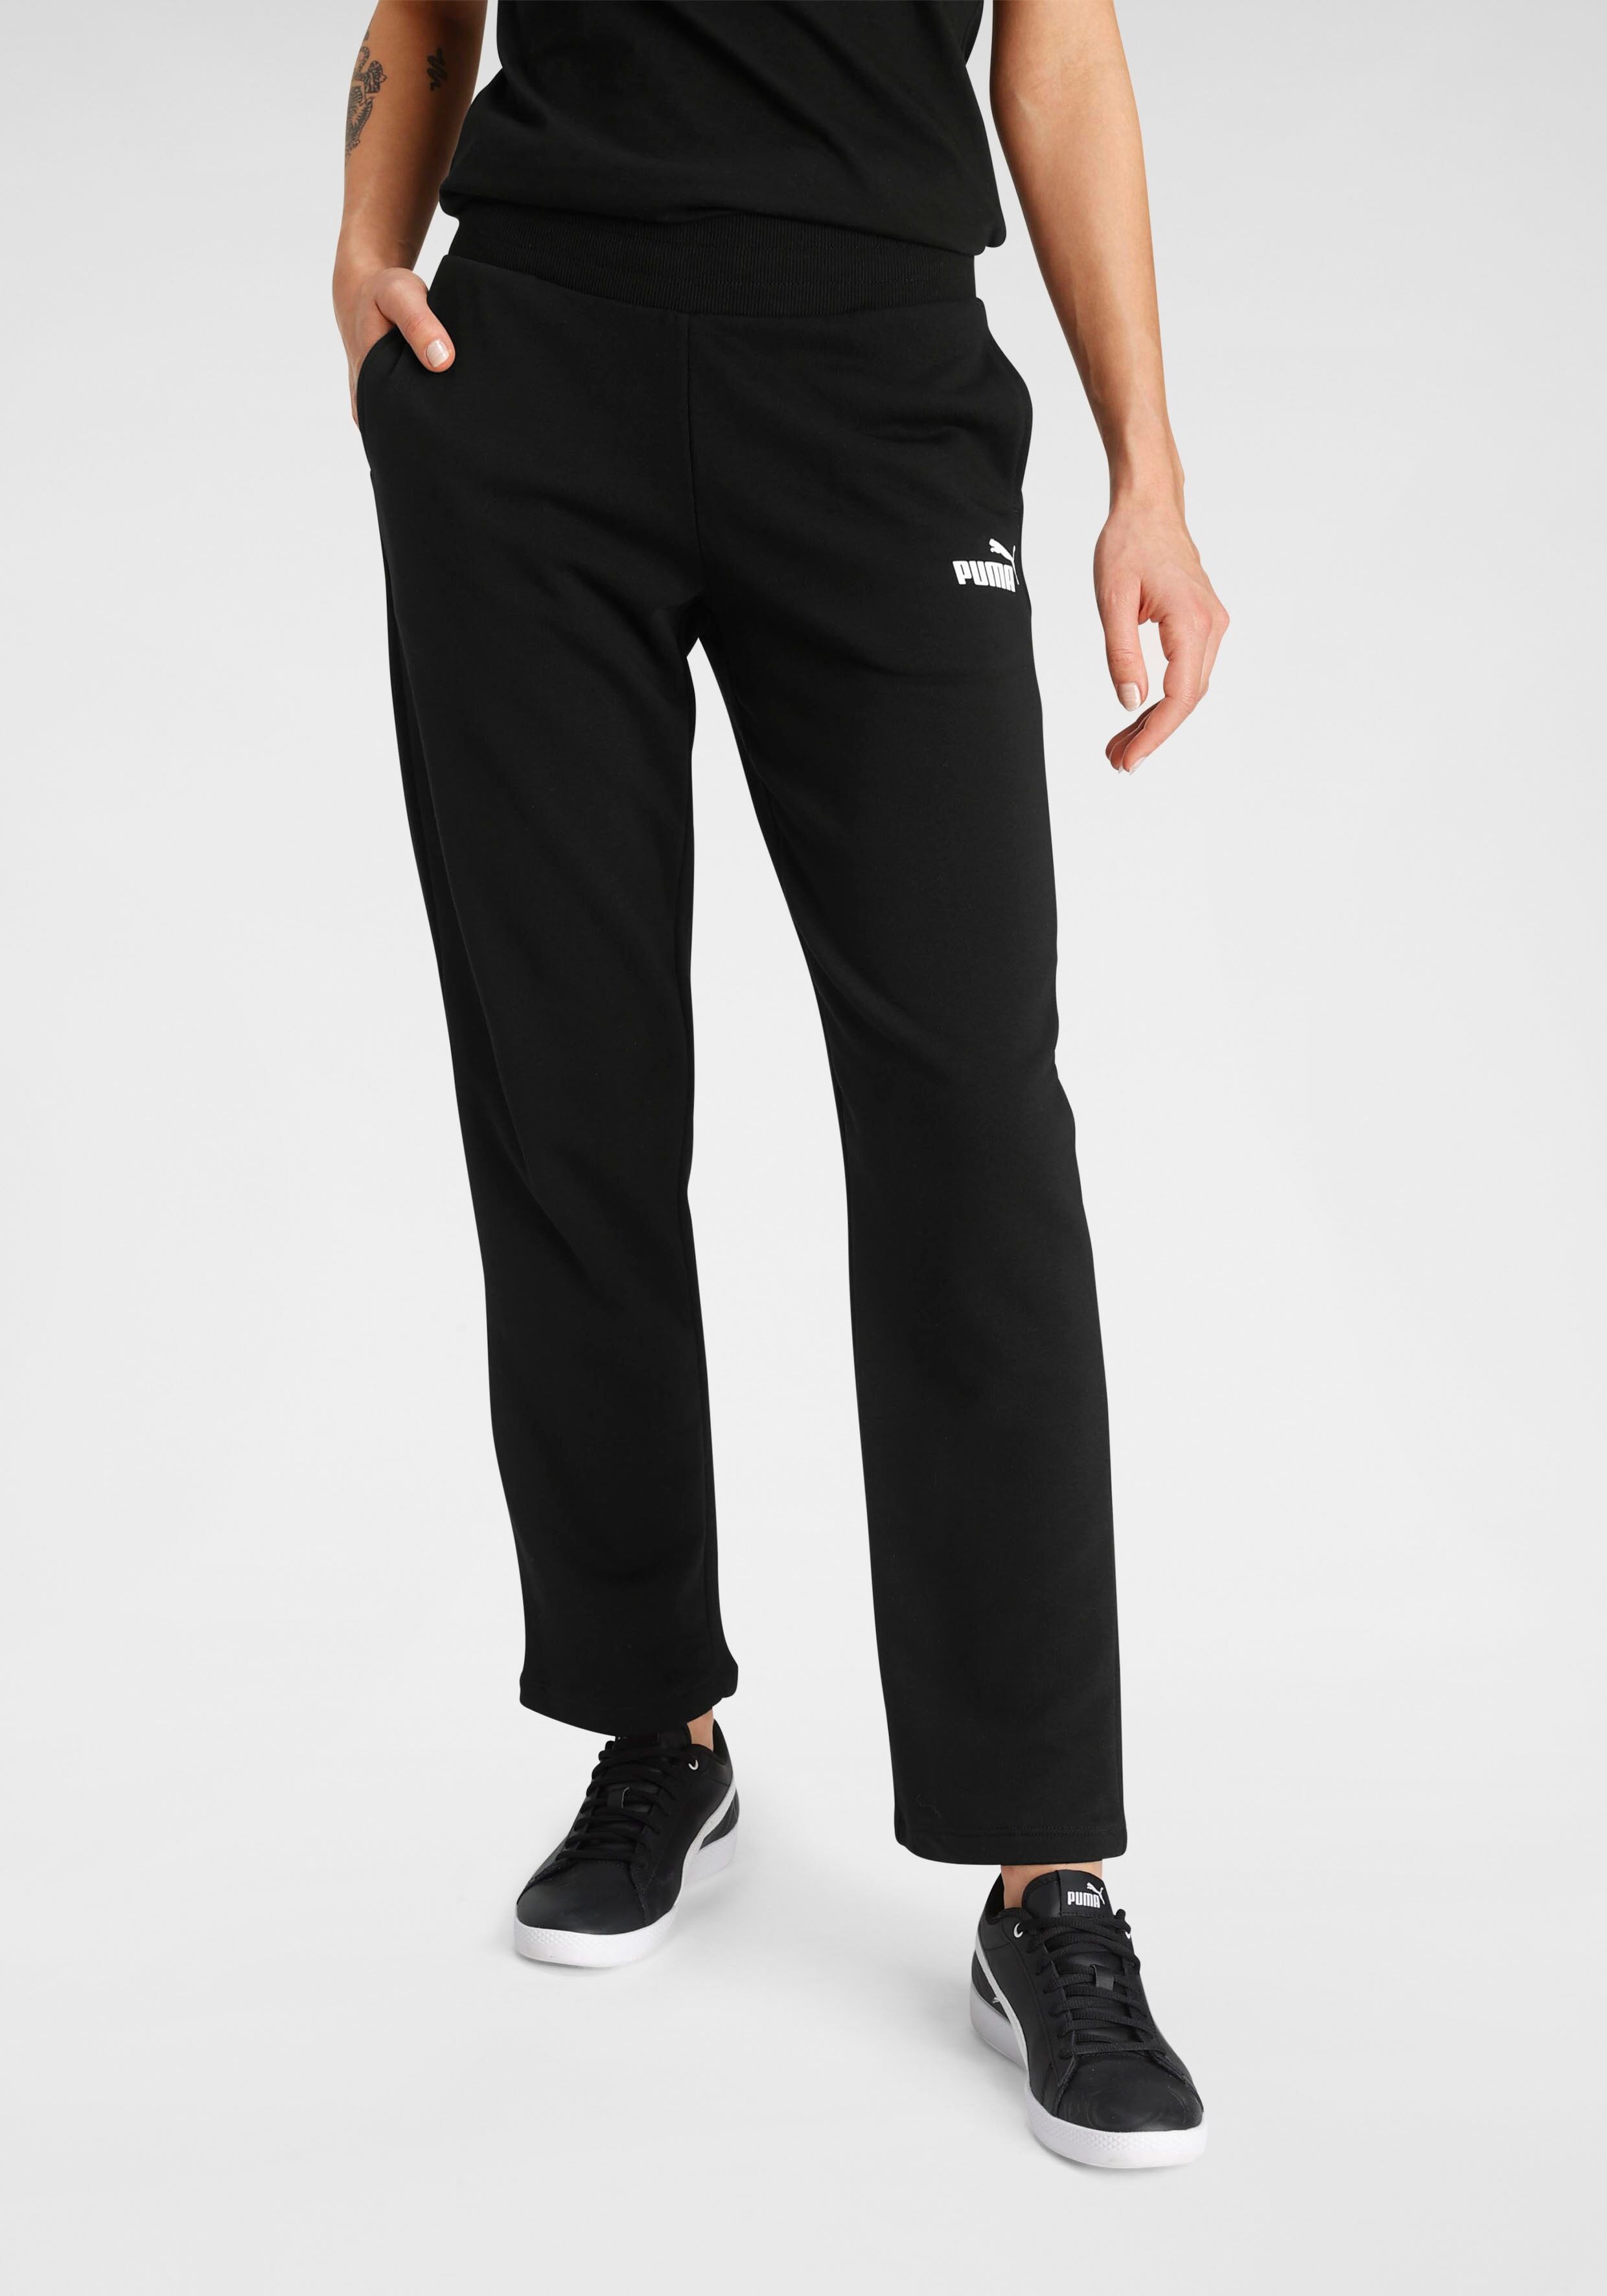 Puma Jogginghose »ESS Sweatpants« schwarz Größe L M S XL XS